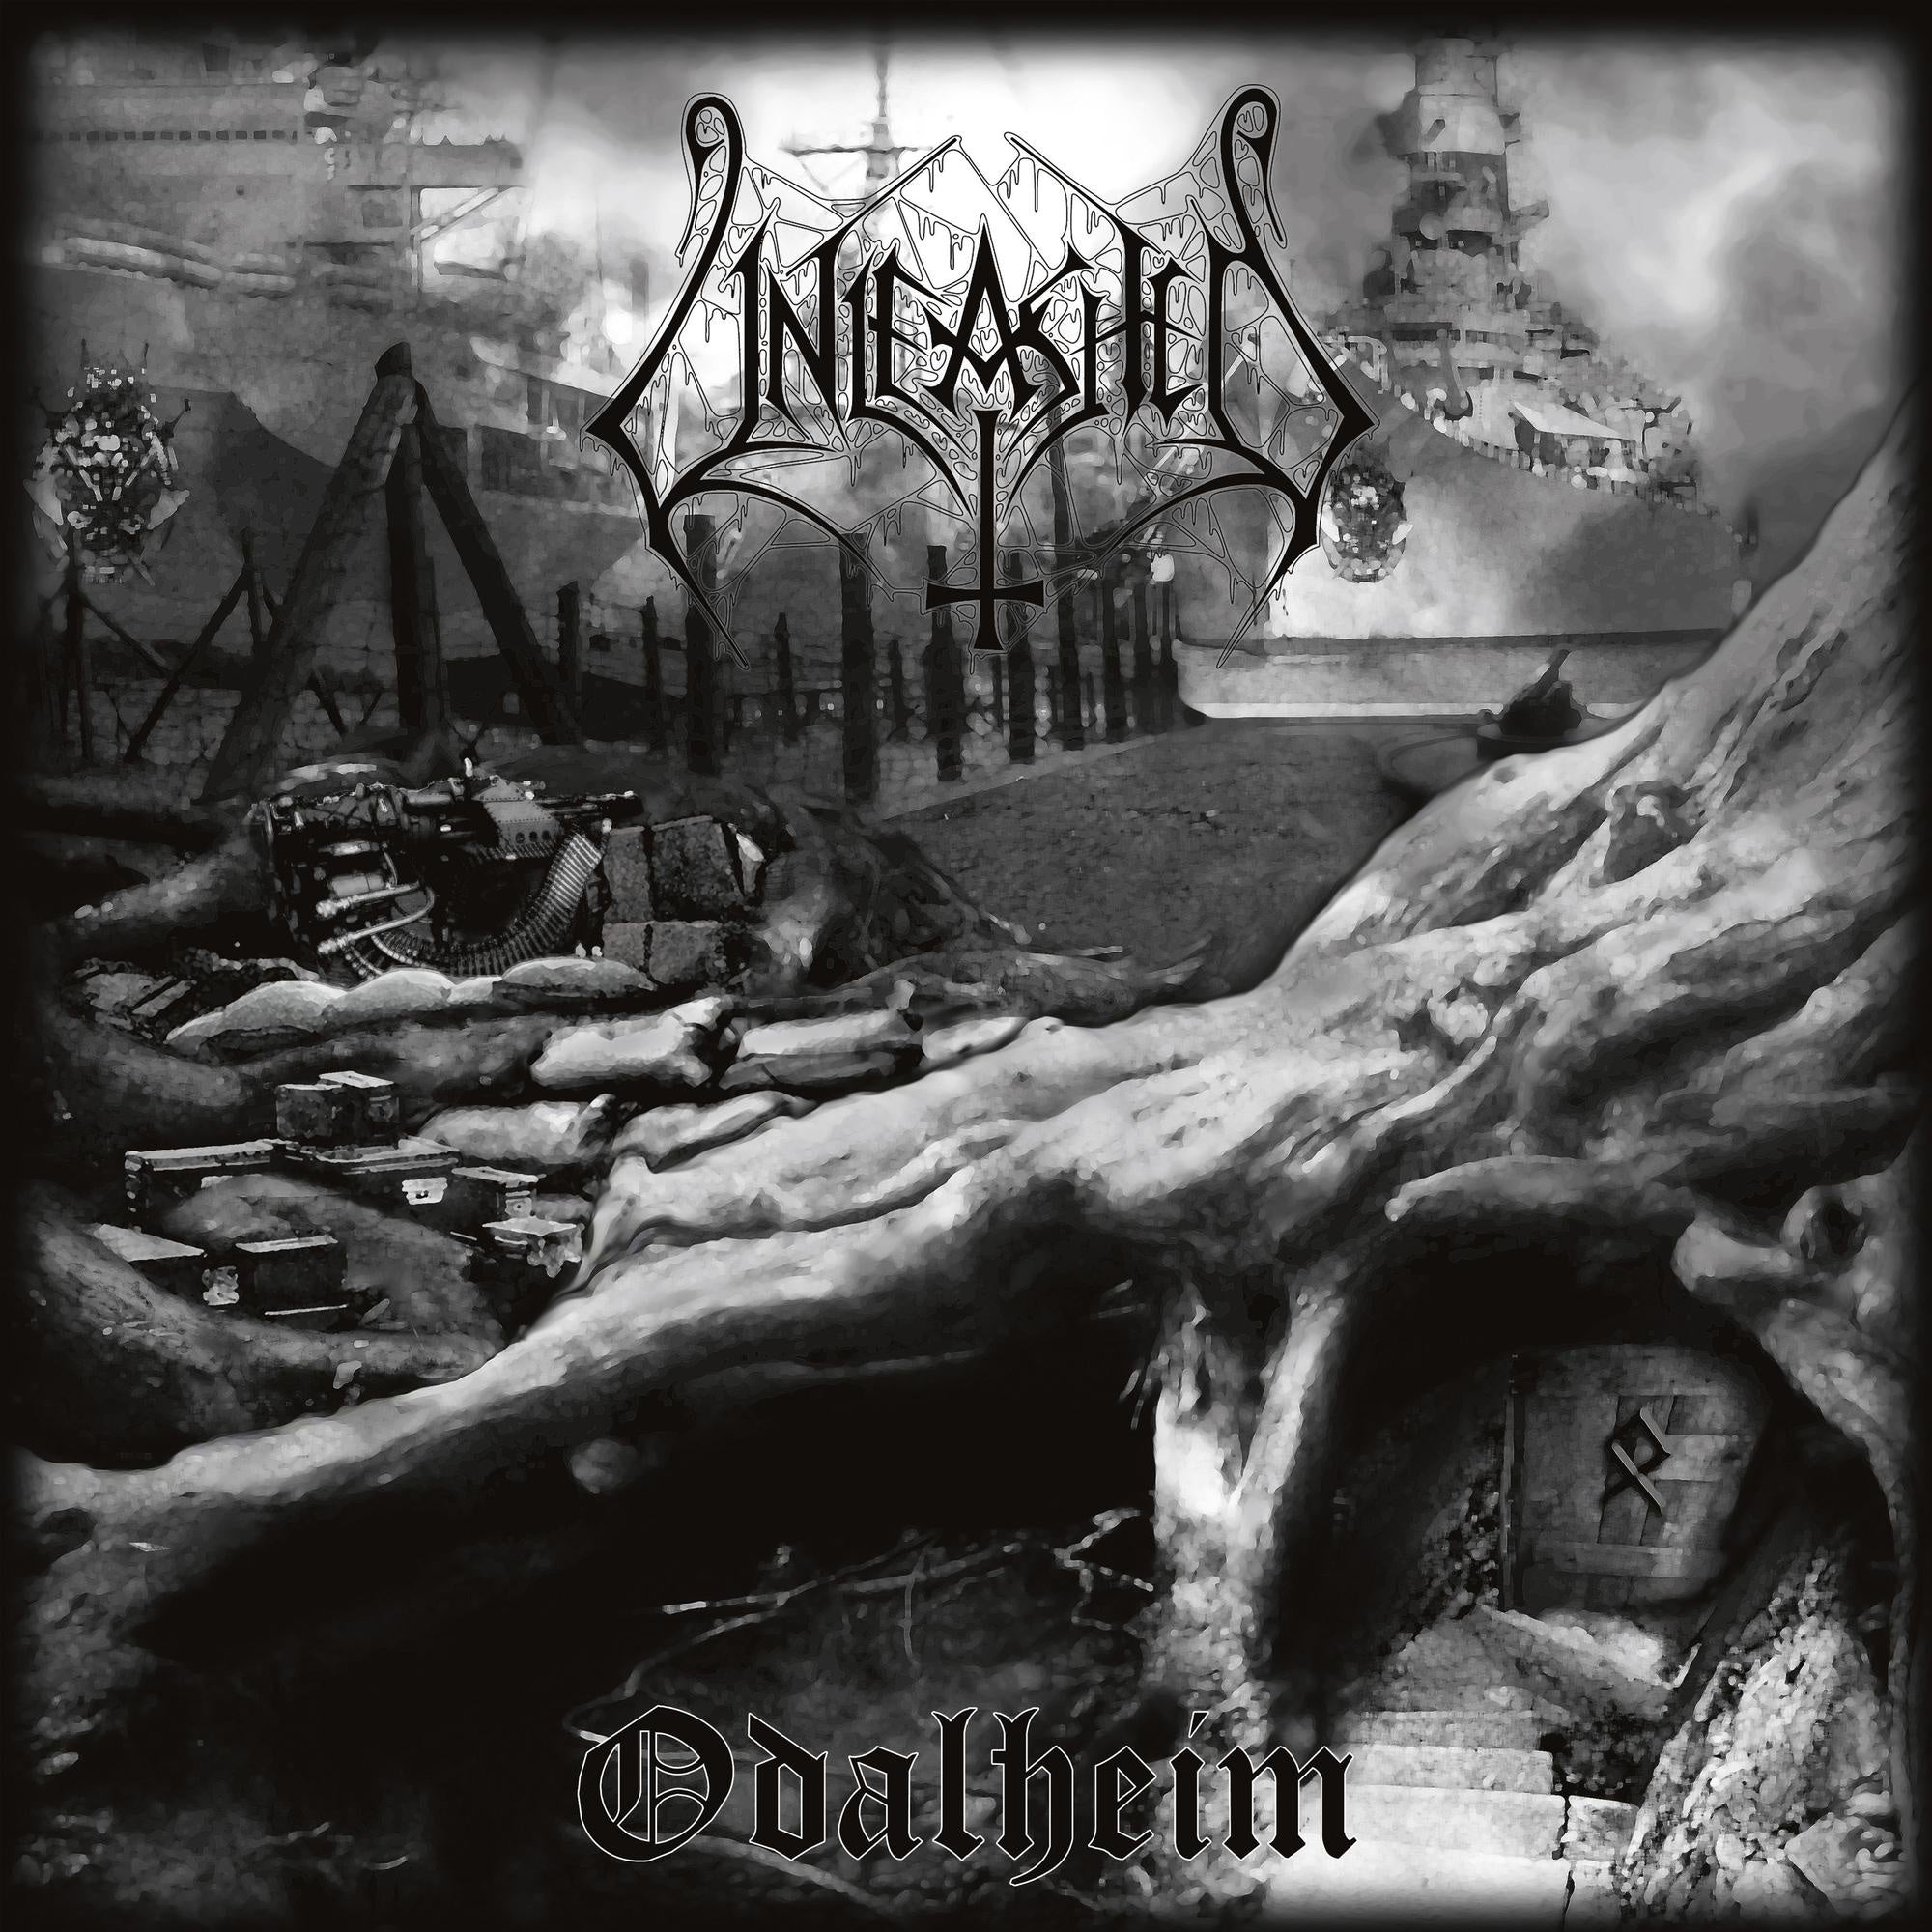 Unleashed - Odalheim - New LP Record 2020 Back On Black Vinyl - Death Metal